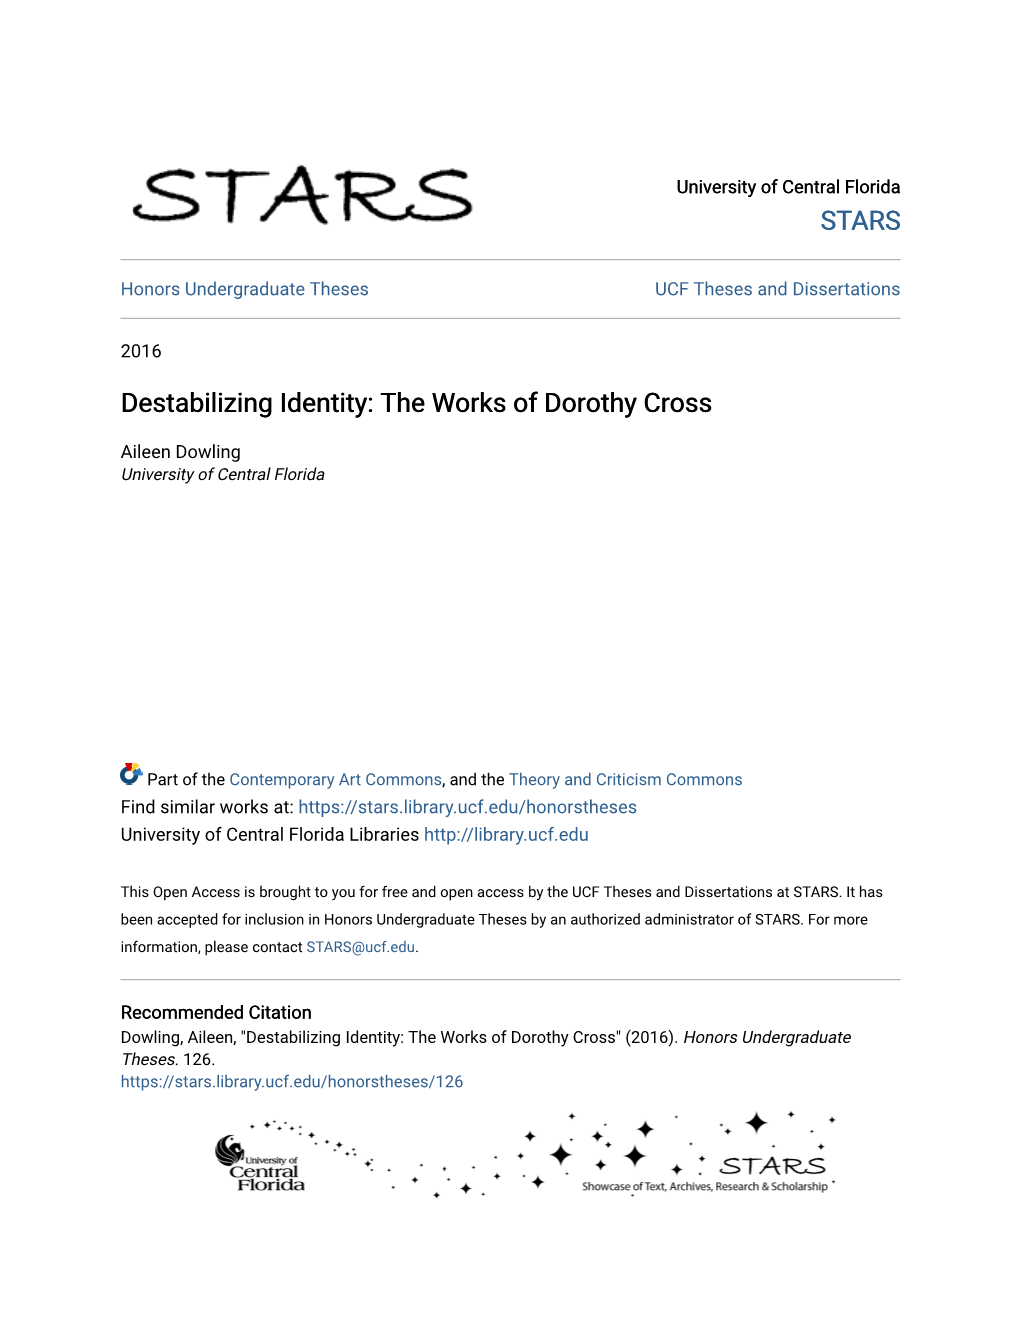 Destabilizing Identity: the Works of Dorothy Cross